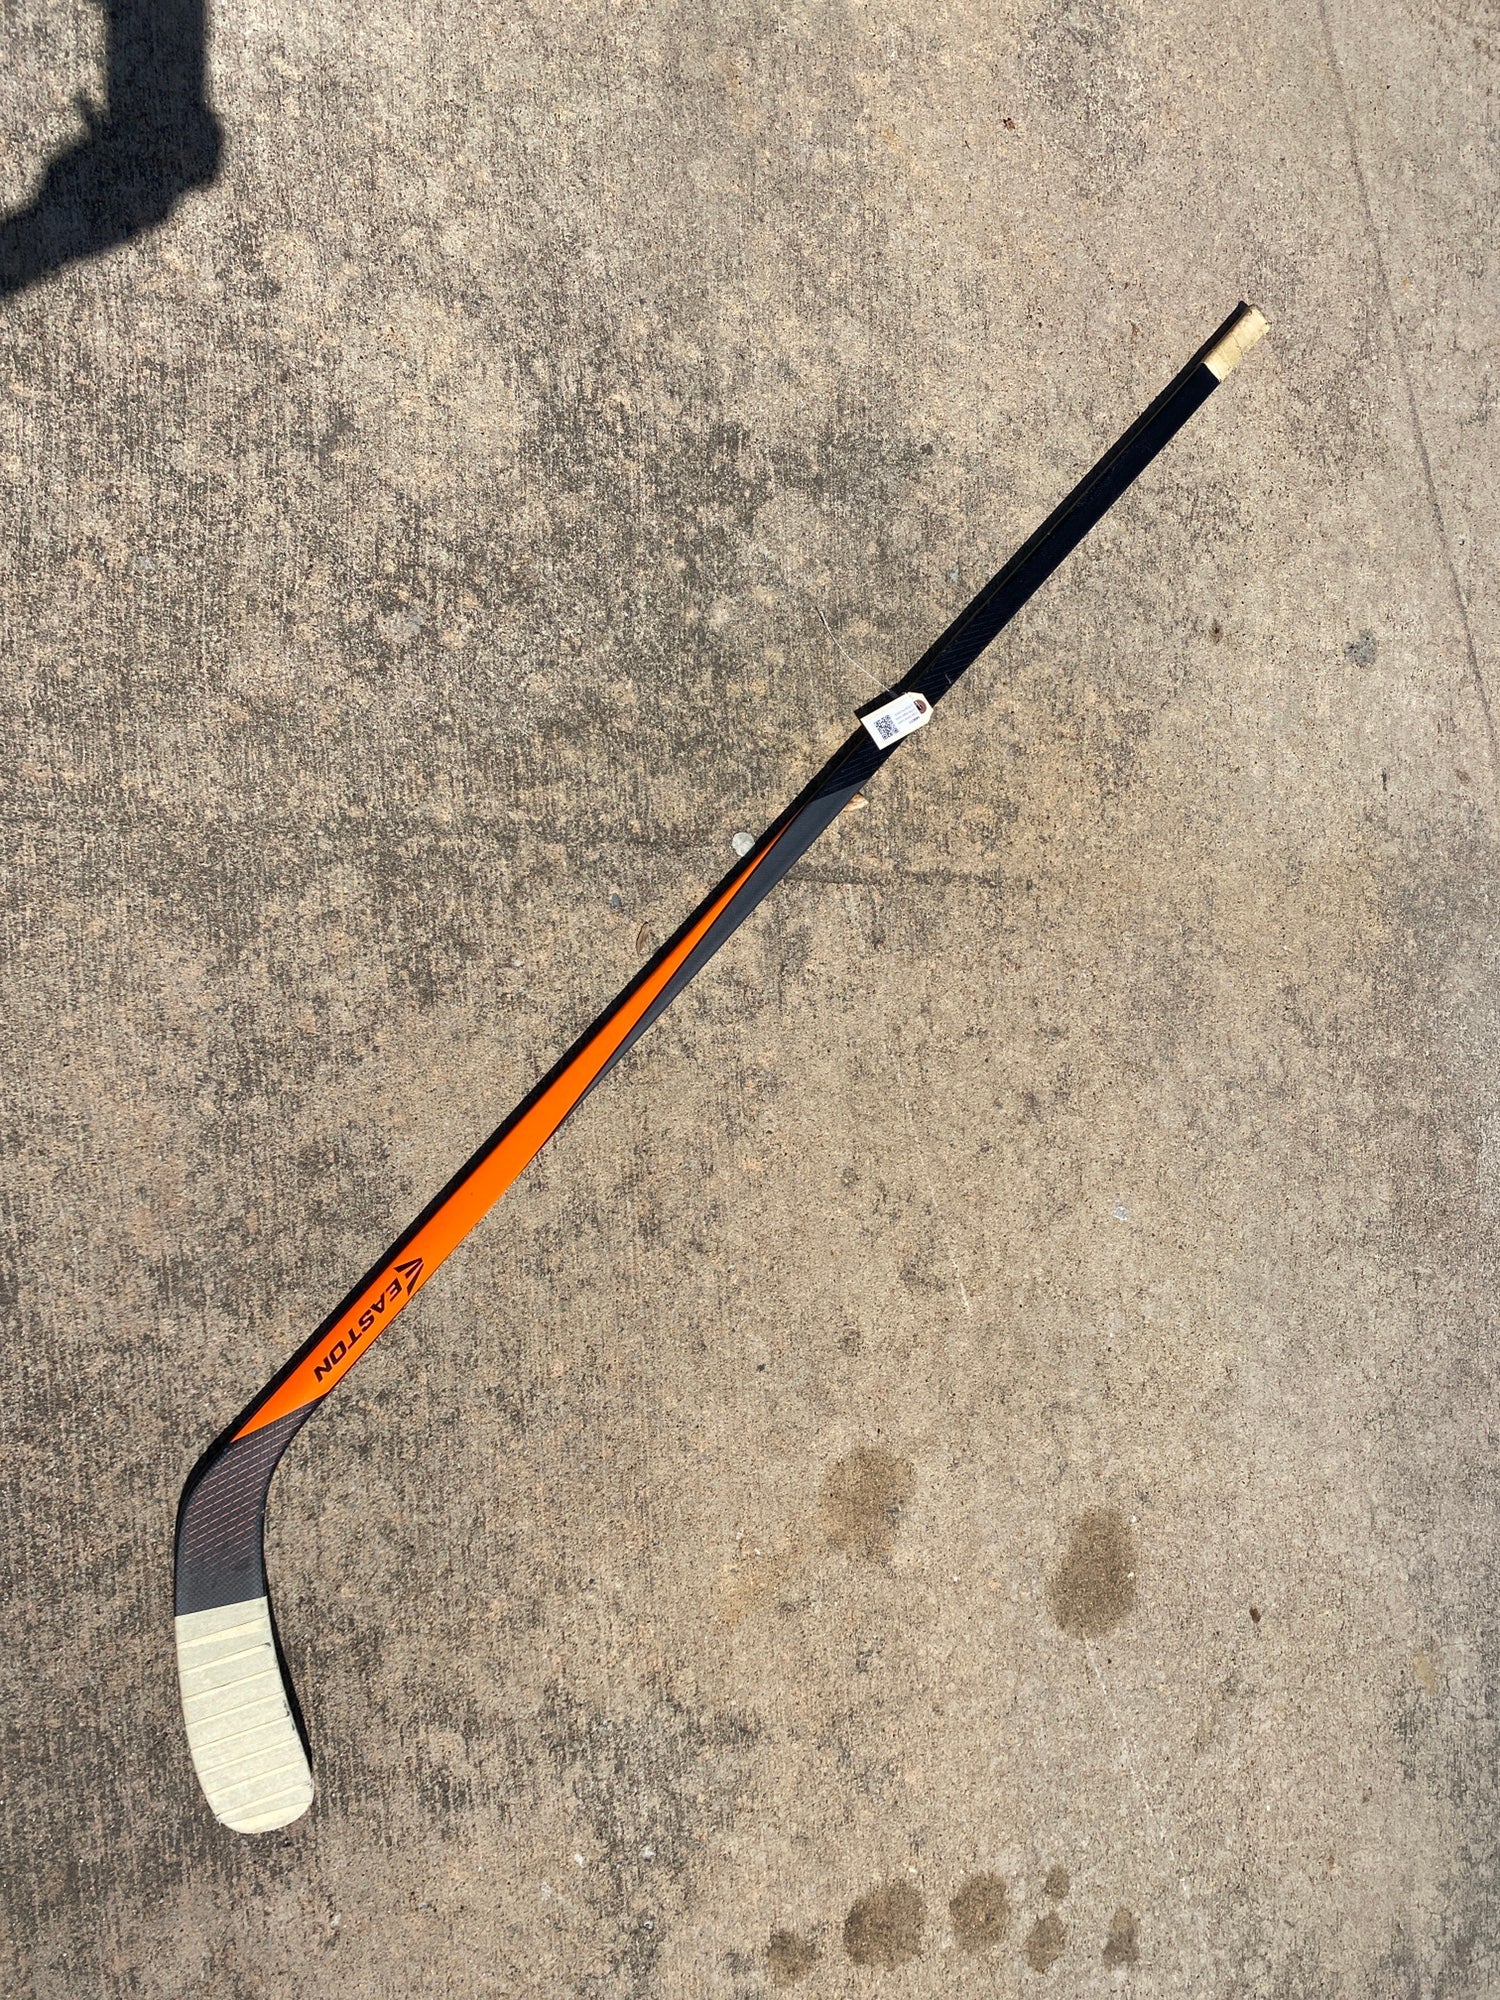 EASTON V9E PURE Hockey Stick $25.00 - PicClick